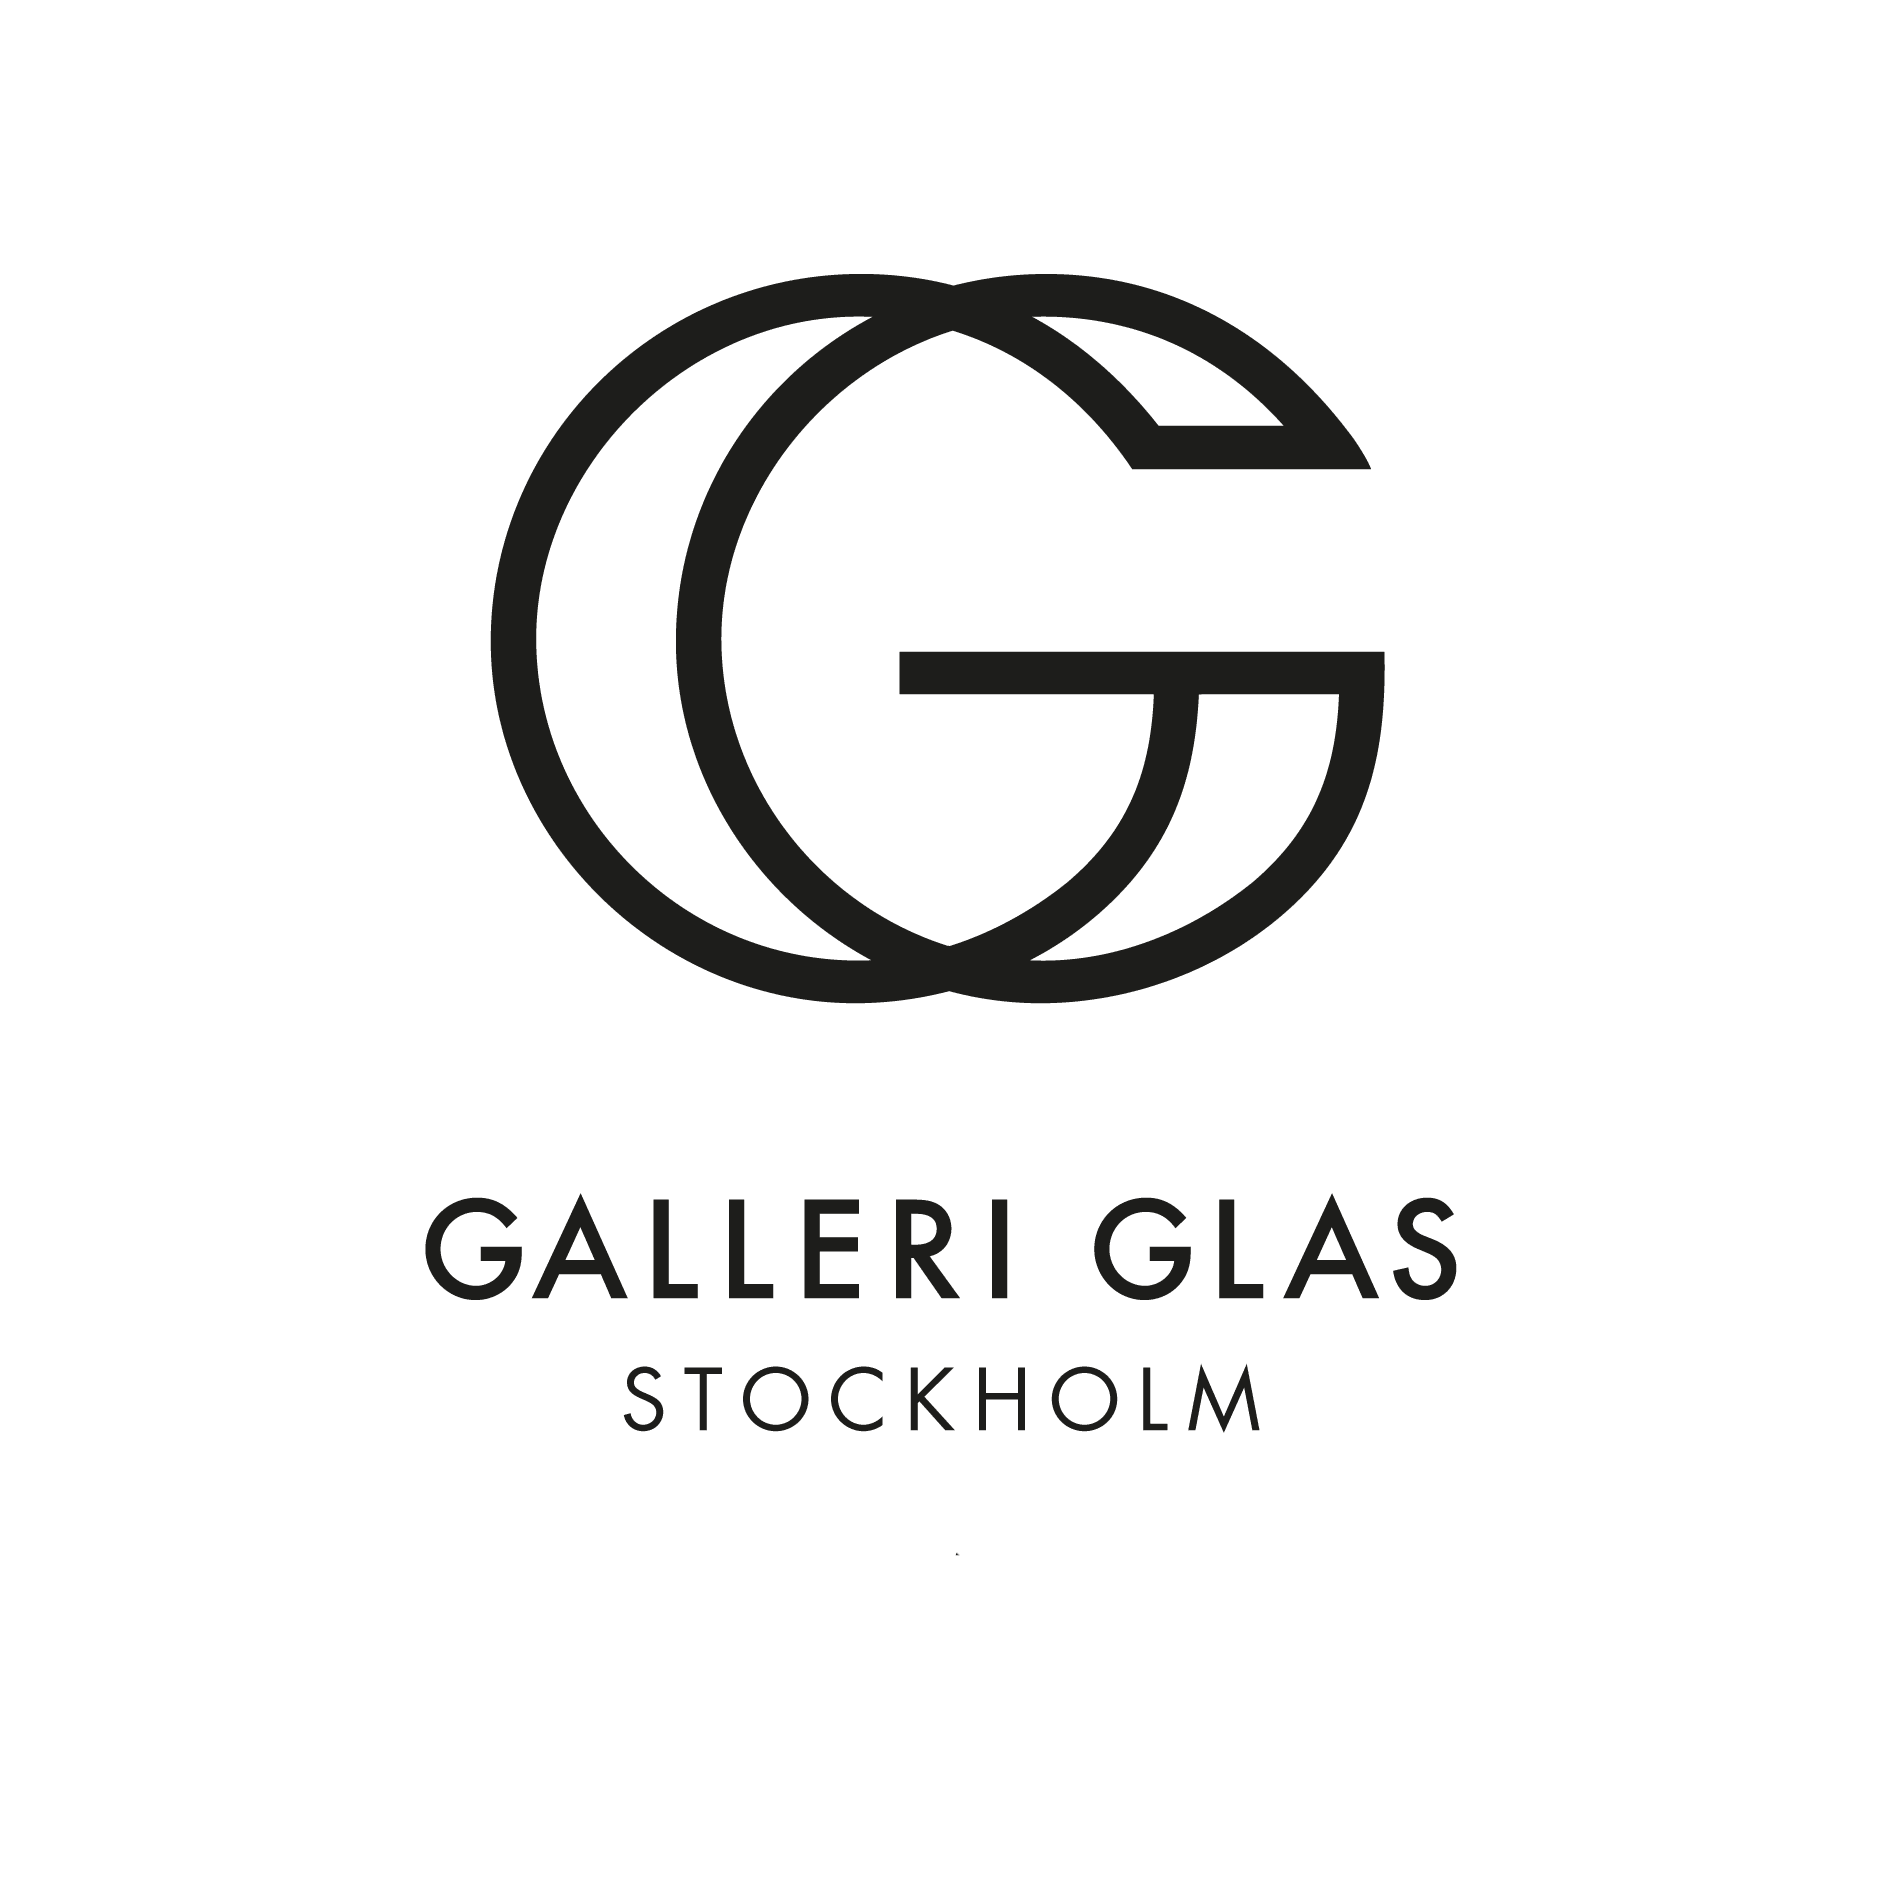 Galleri Glas company logo